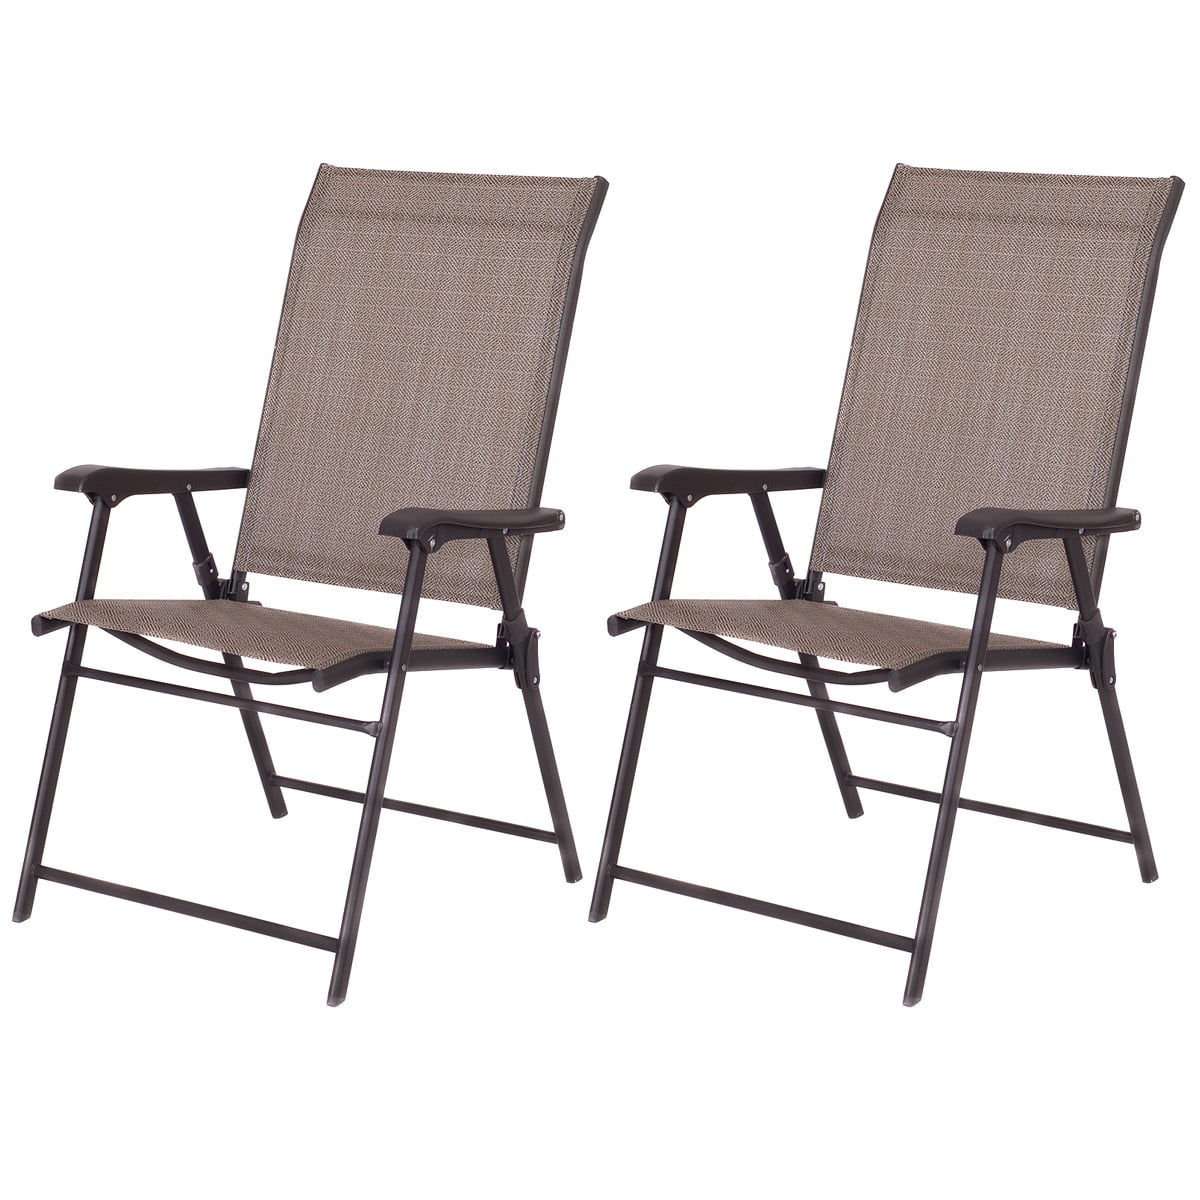 Topbuy Plastic Folding Chair (2 Pack), Brown - Walmart.com - Walmart.com